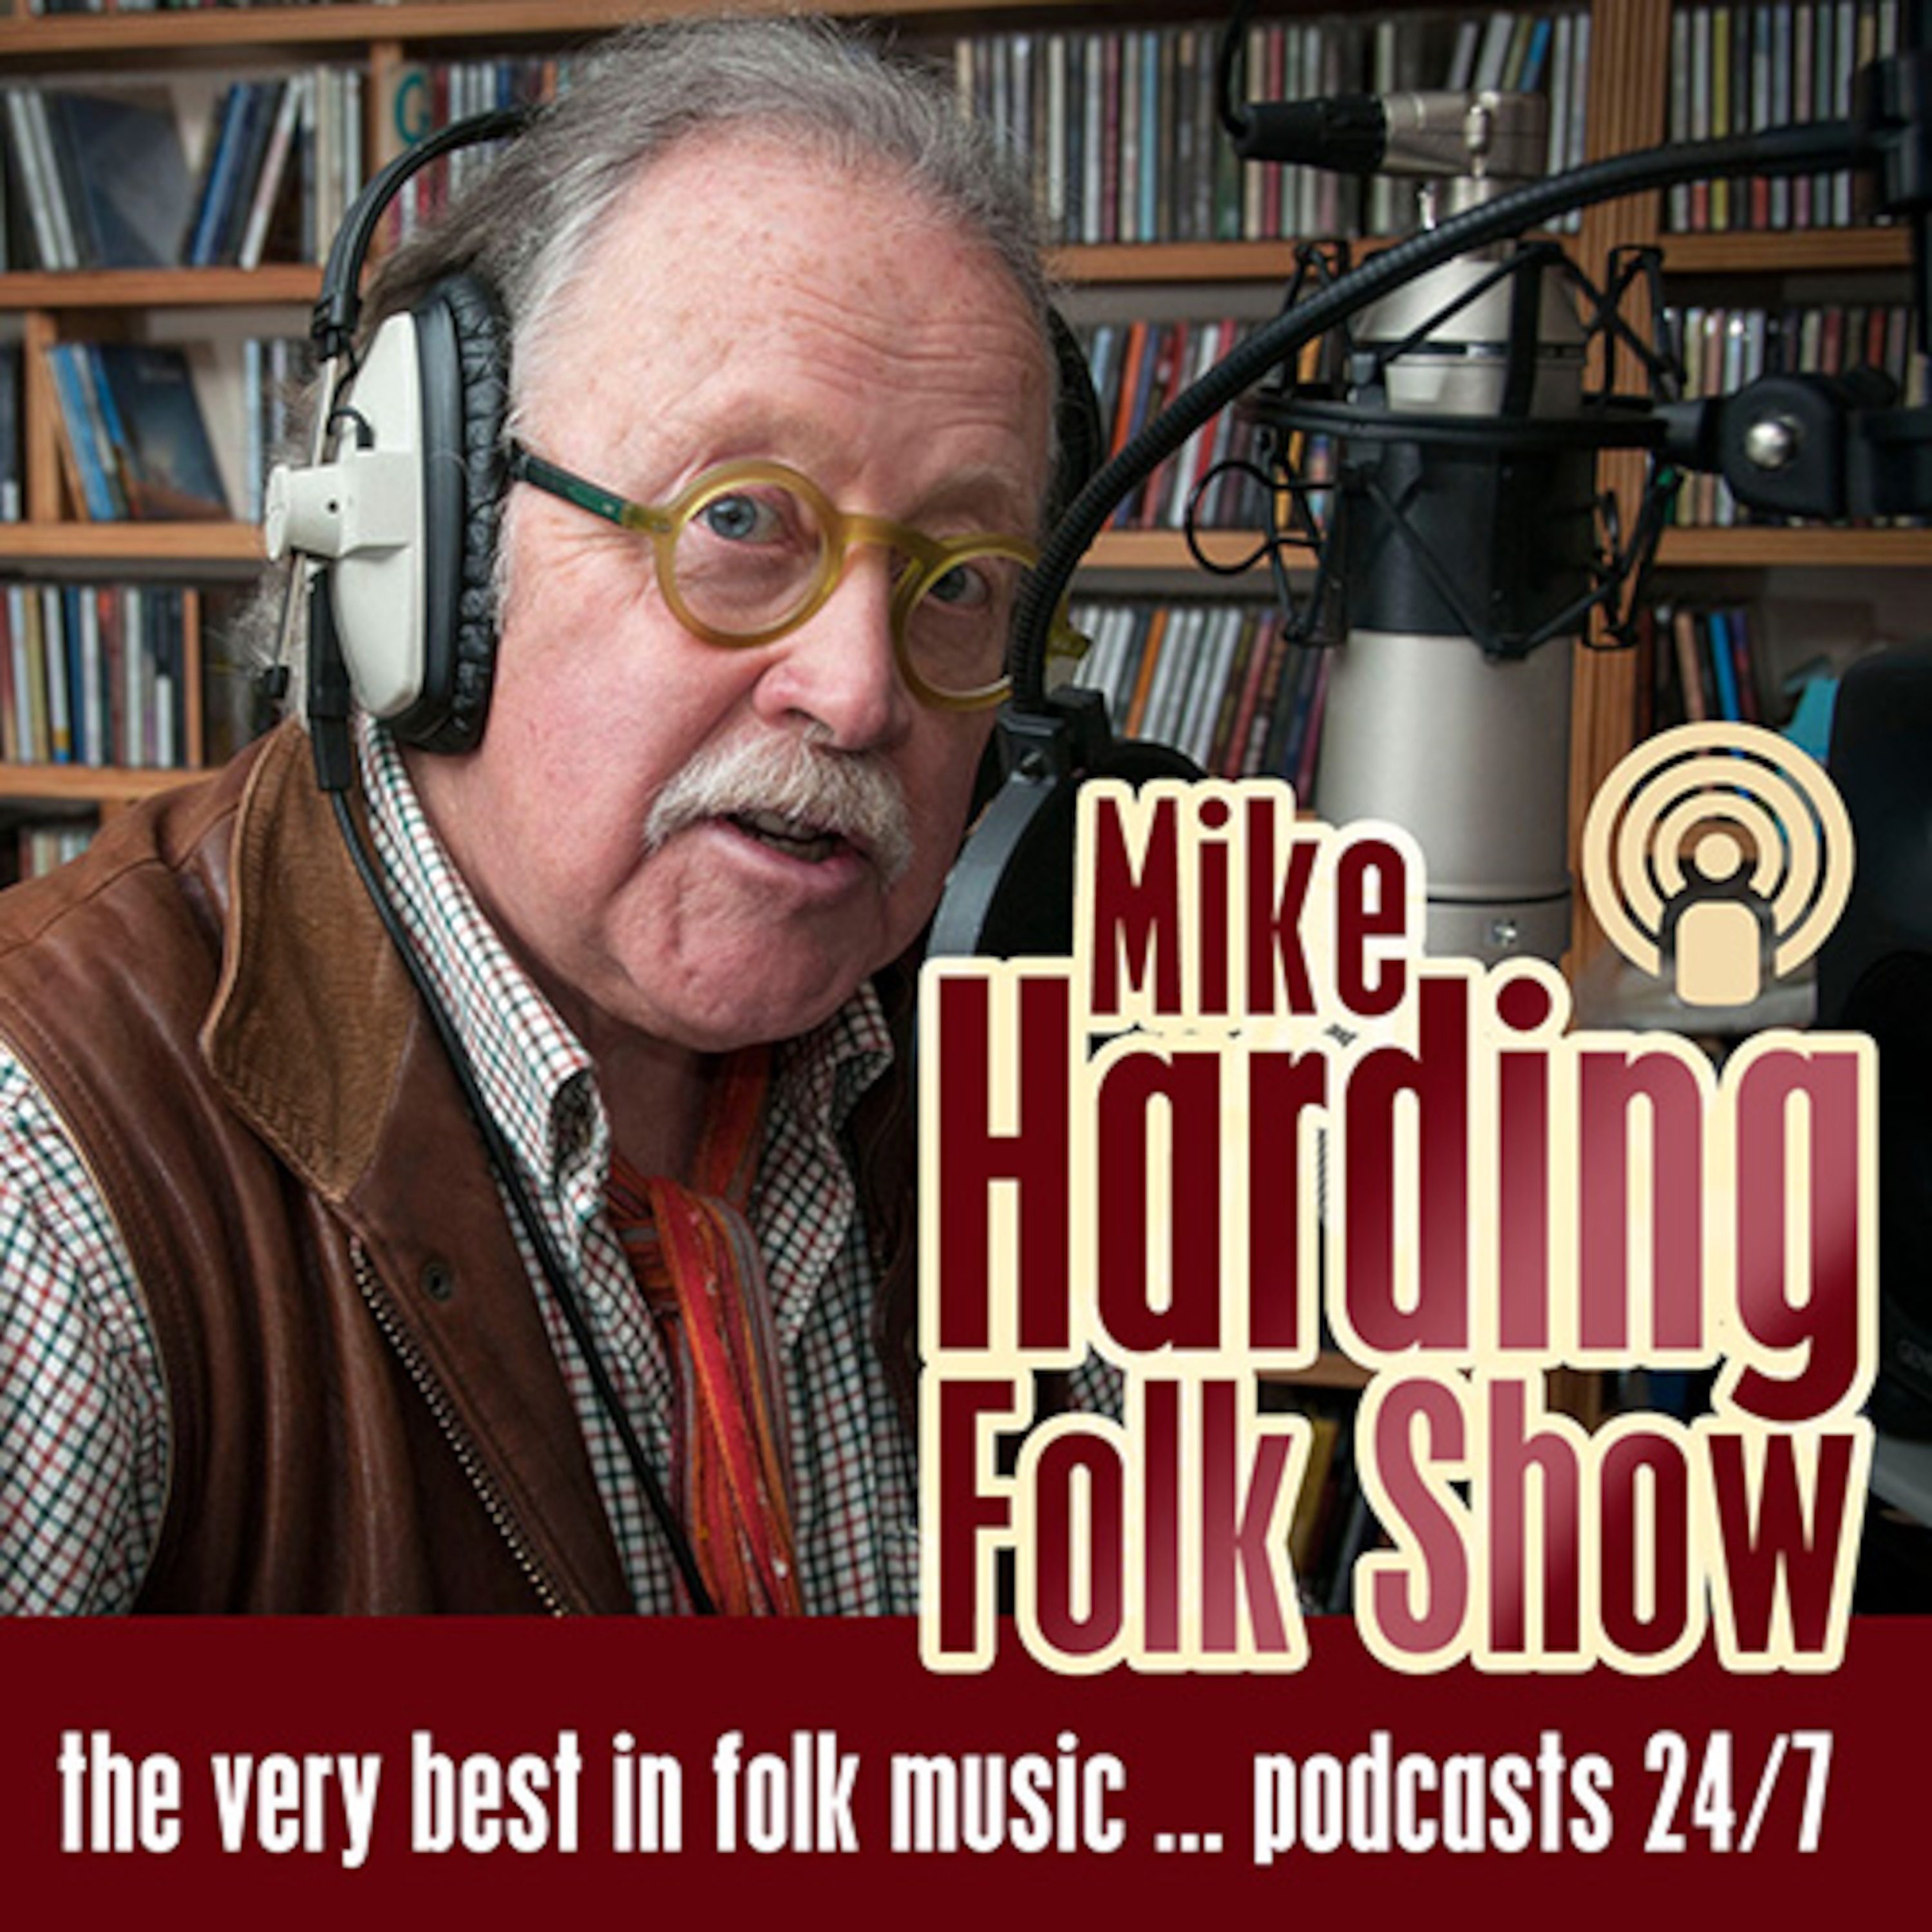 Mike Harding Folk Show 188